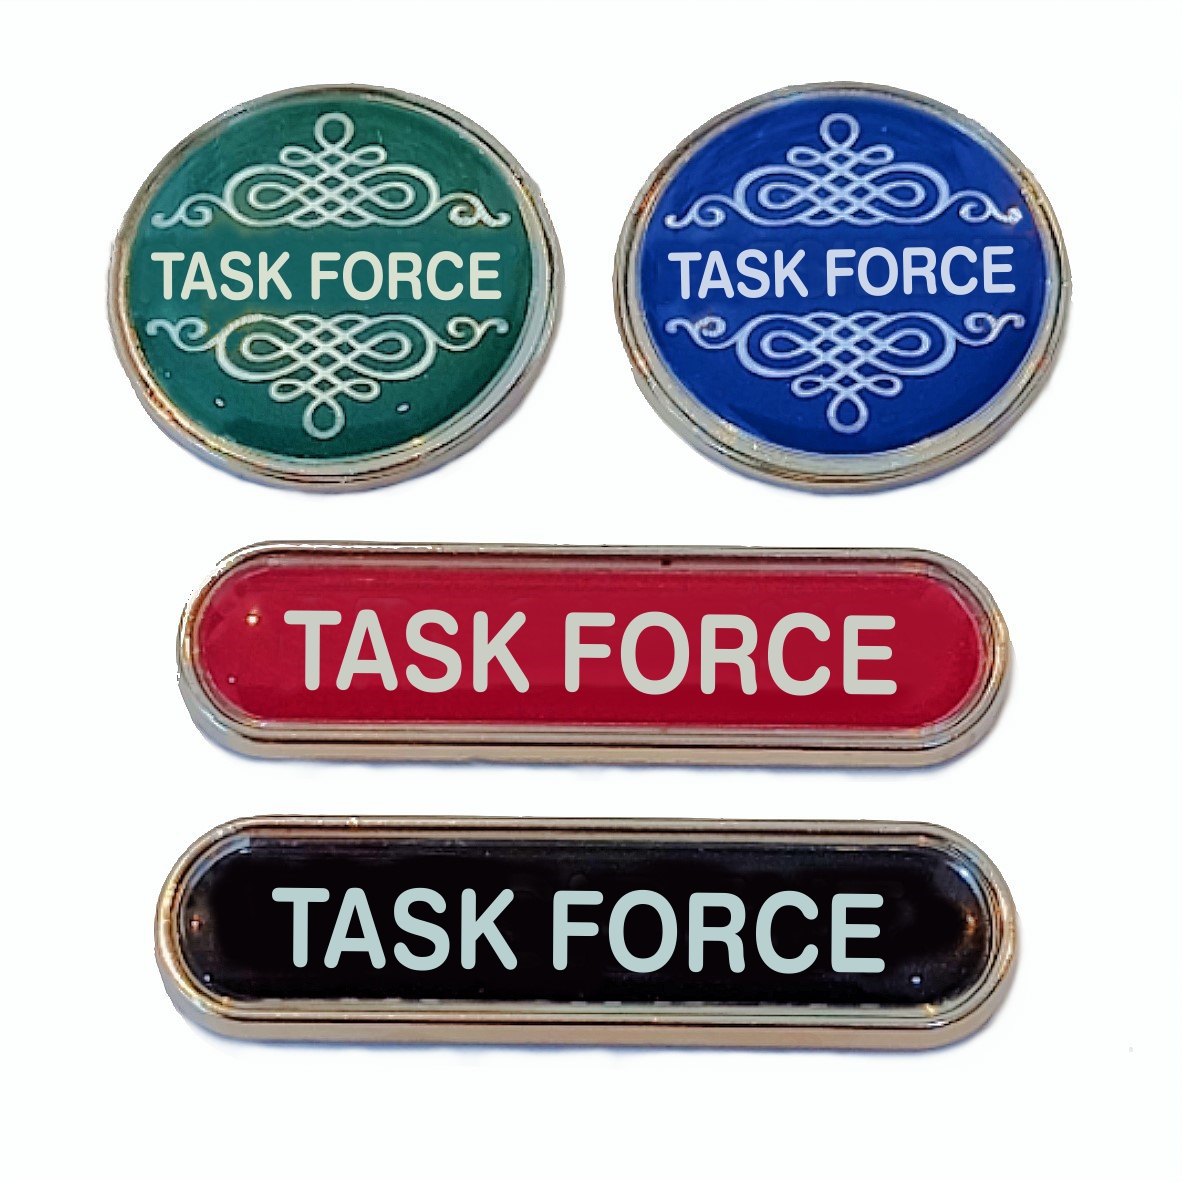 TASK FORCE badge